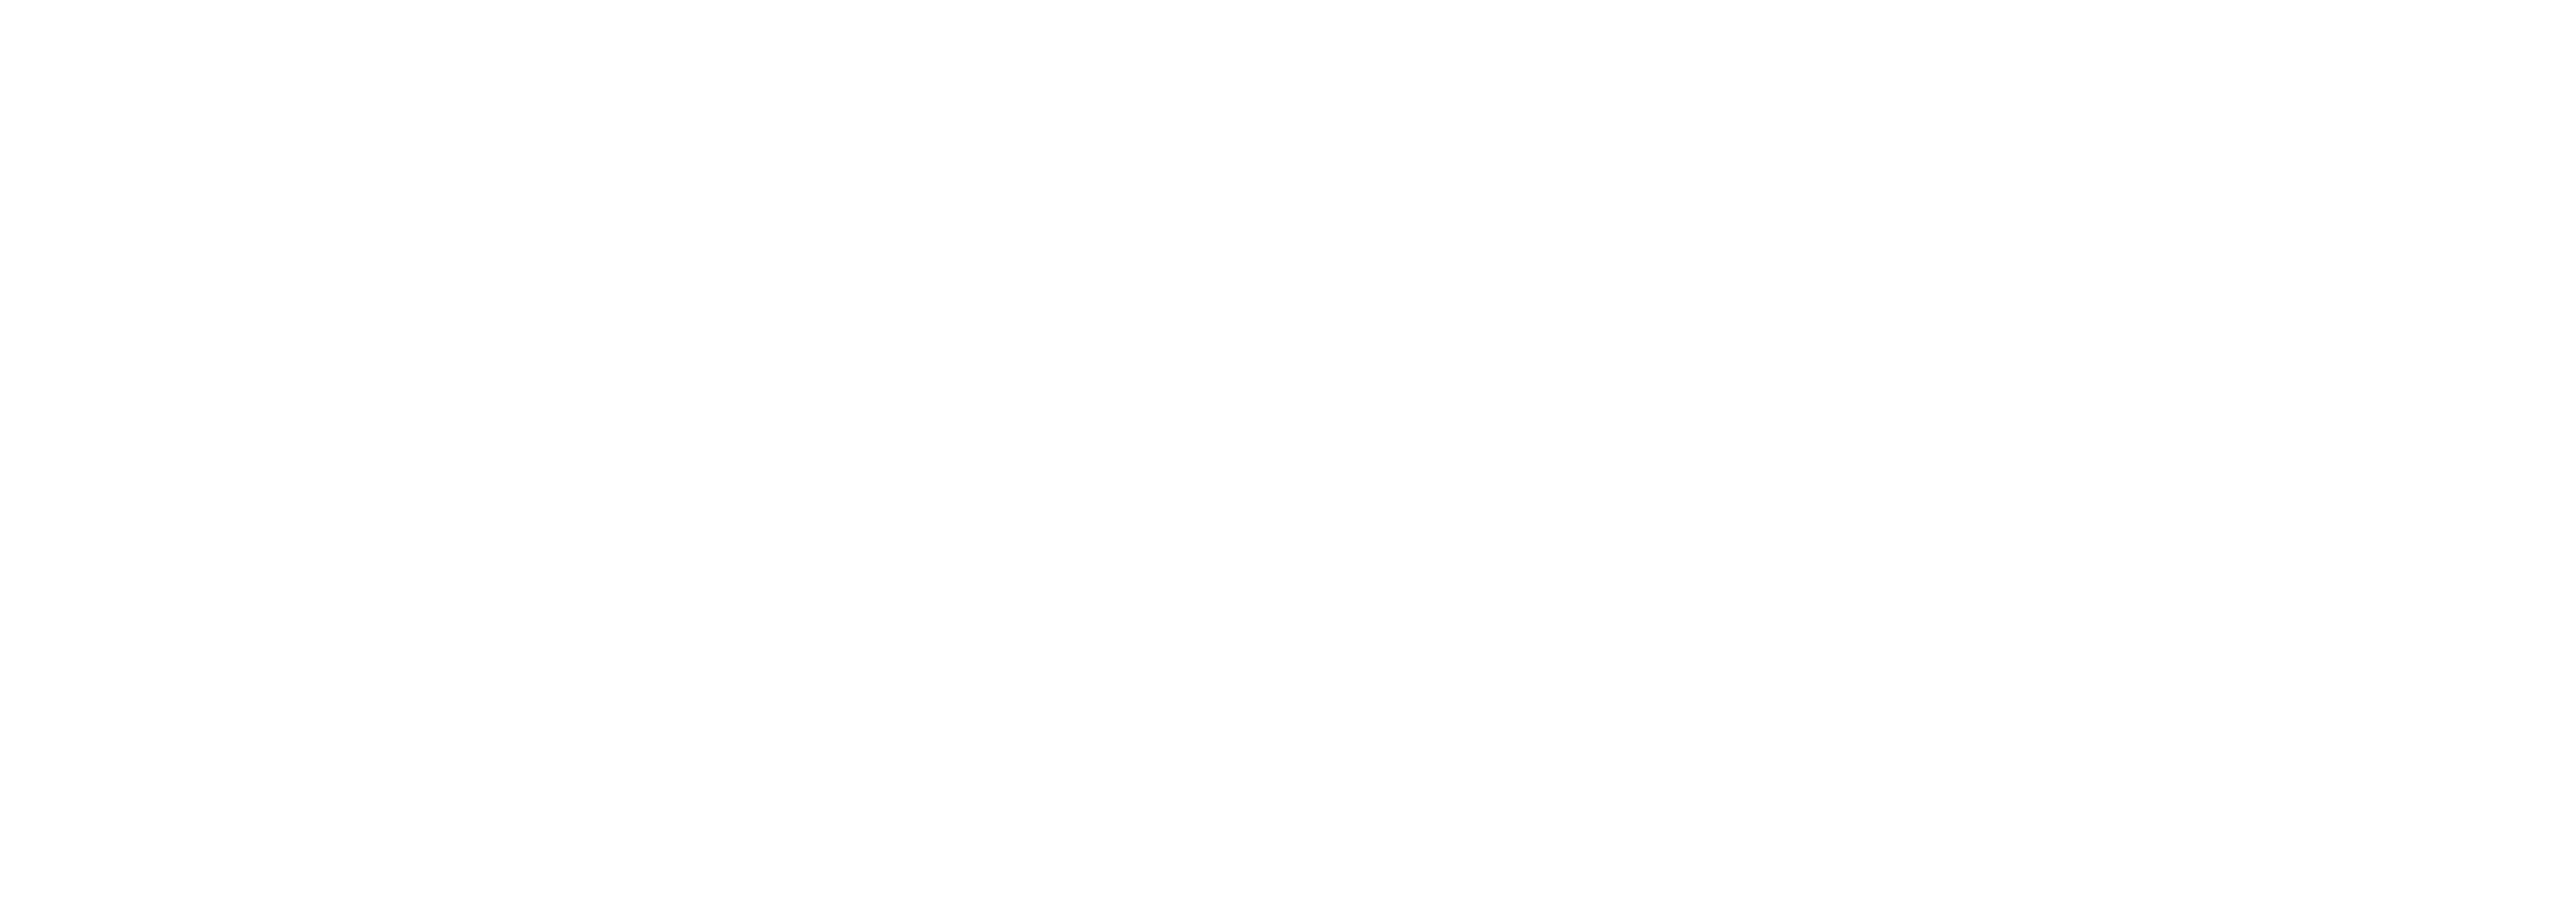 July 2021 - Big Brothers Big Sisters of Halton and Hamilton